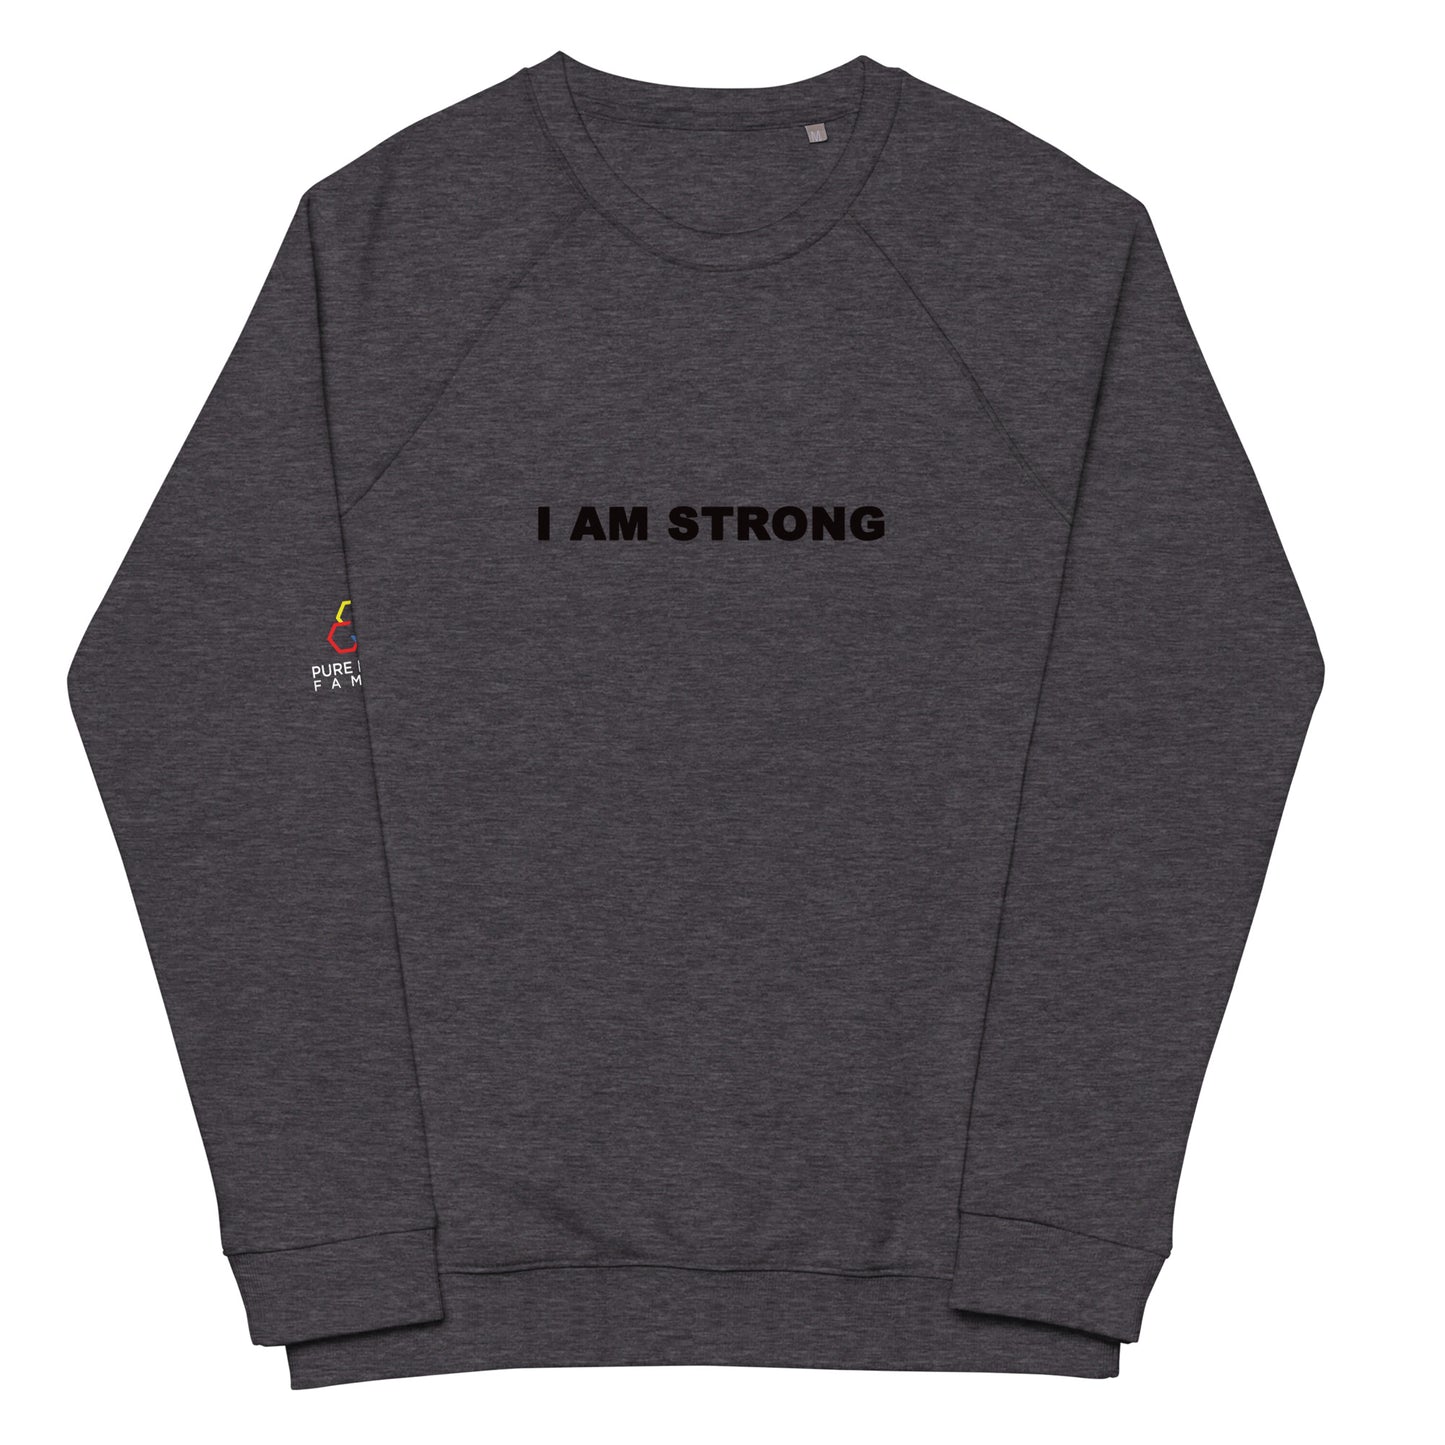 I AM STRONG- Unisex organic raglan sweatshirt